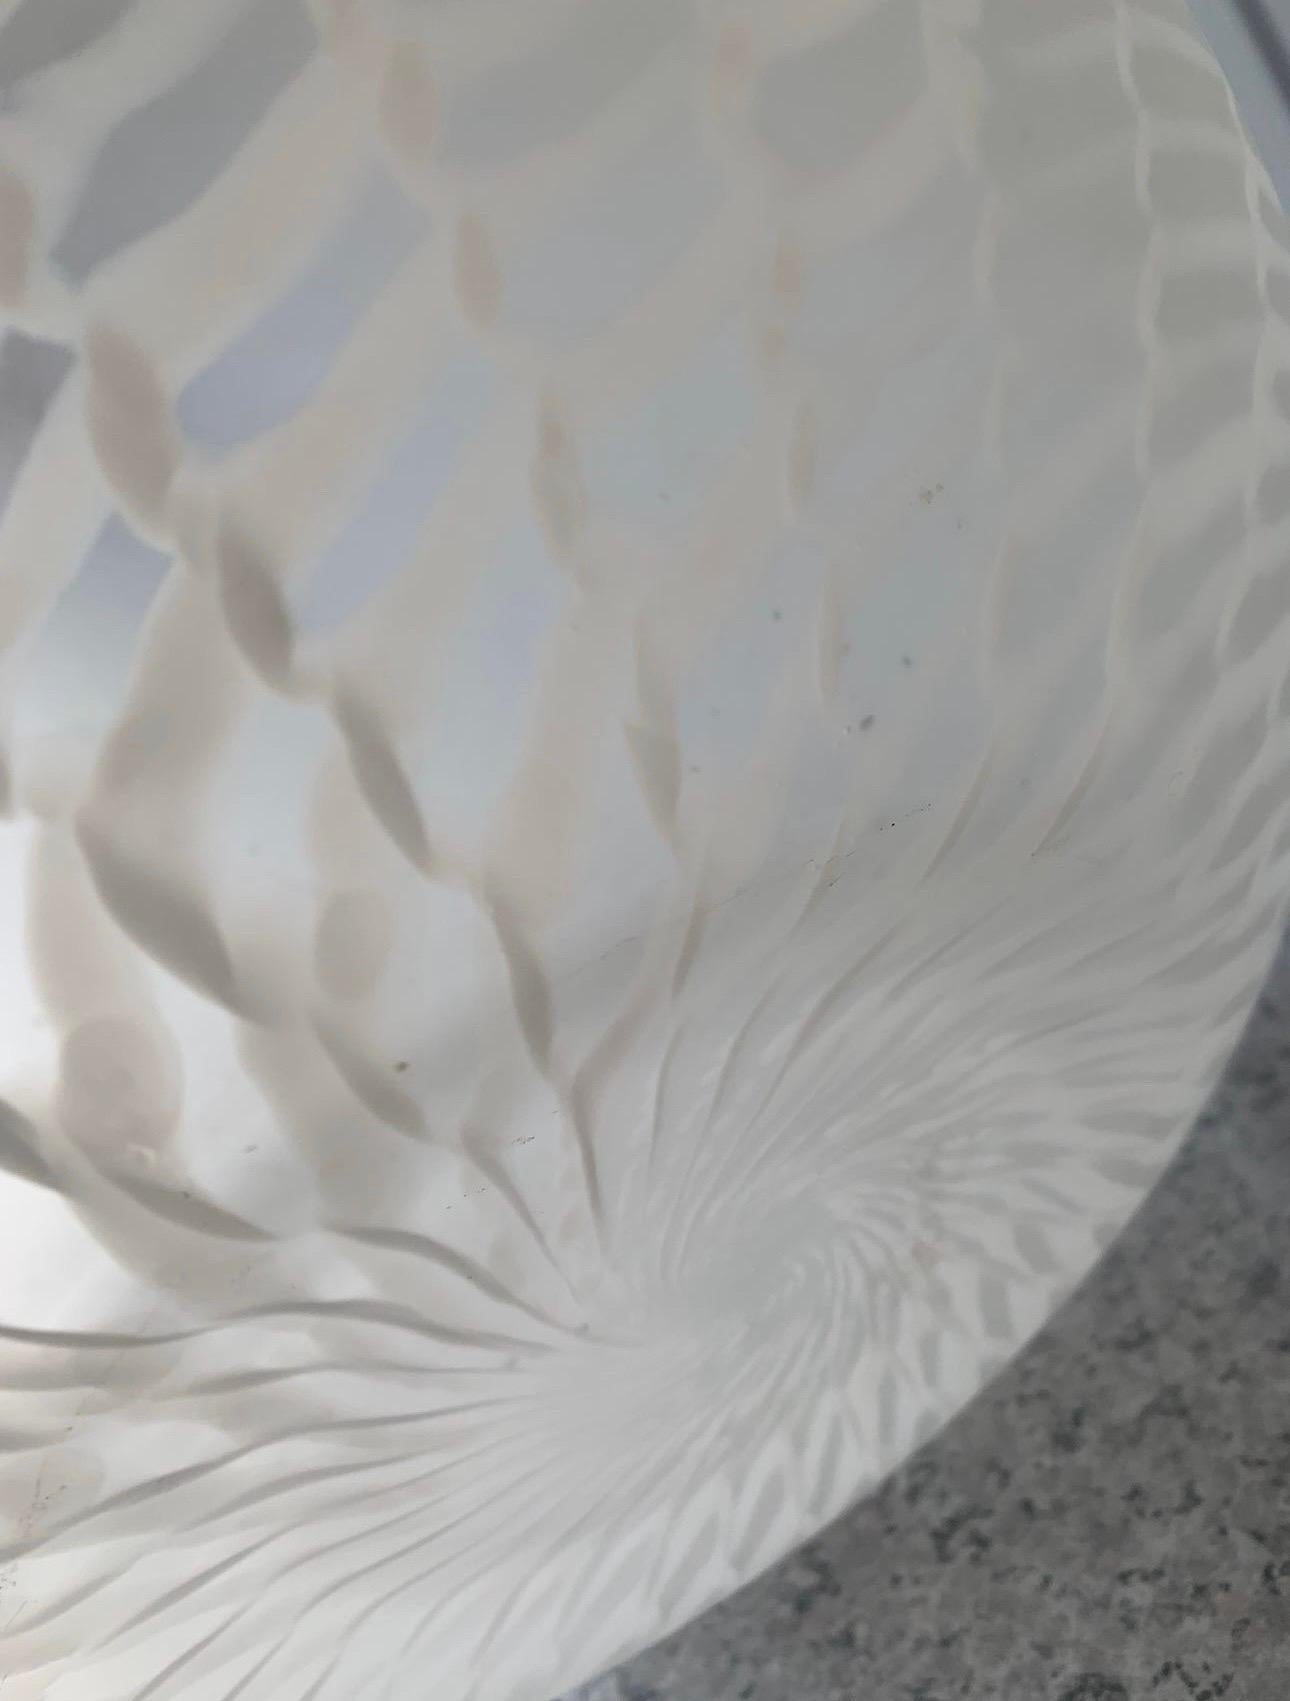  Vintage Large Murano Italian Glass Vase With White monochromatic Scallop Design For Sale 1